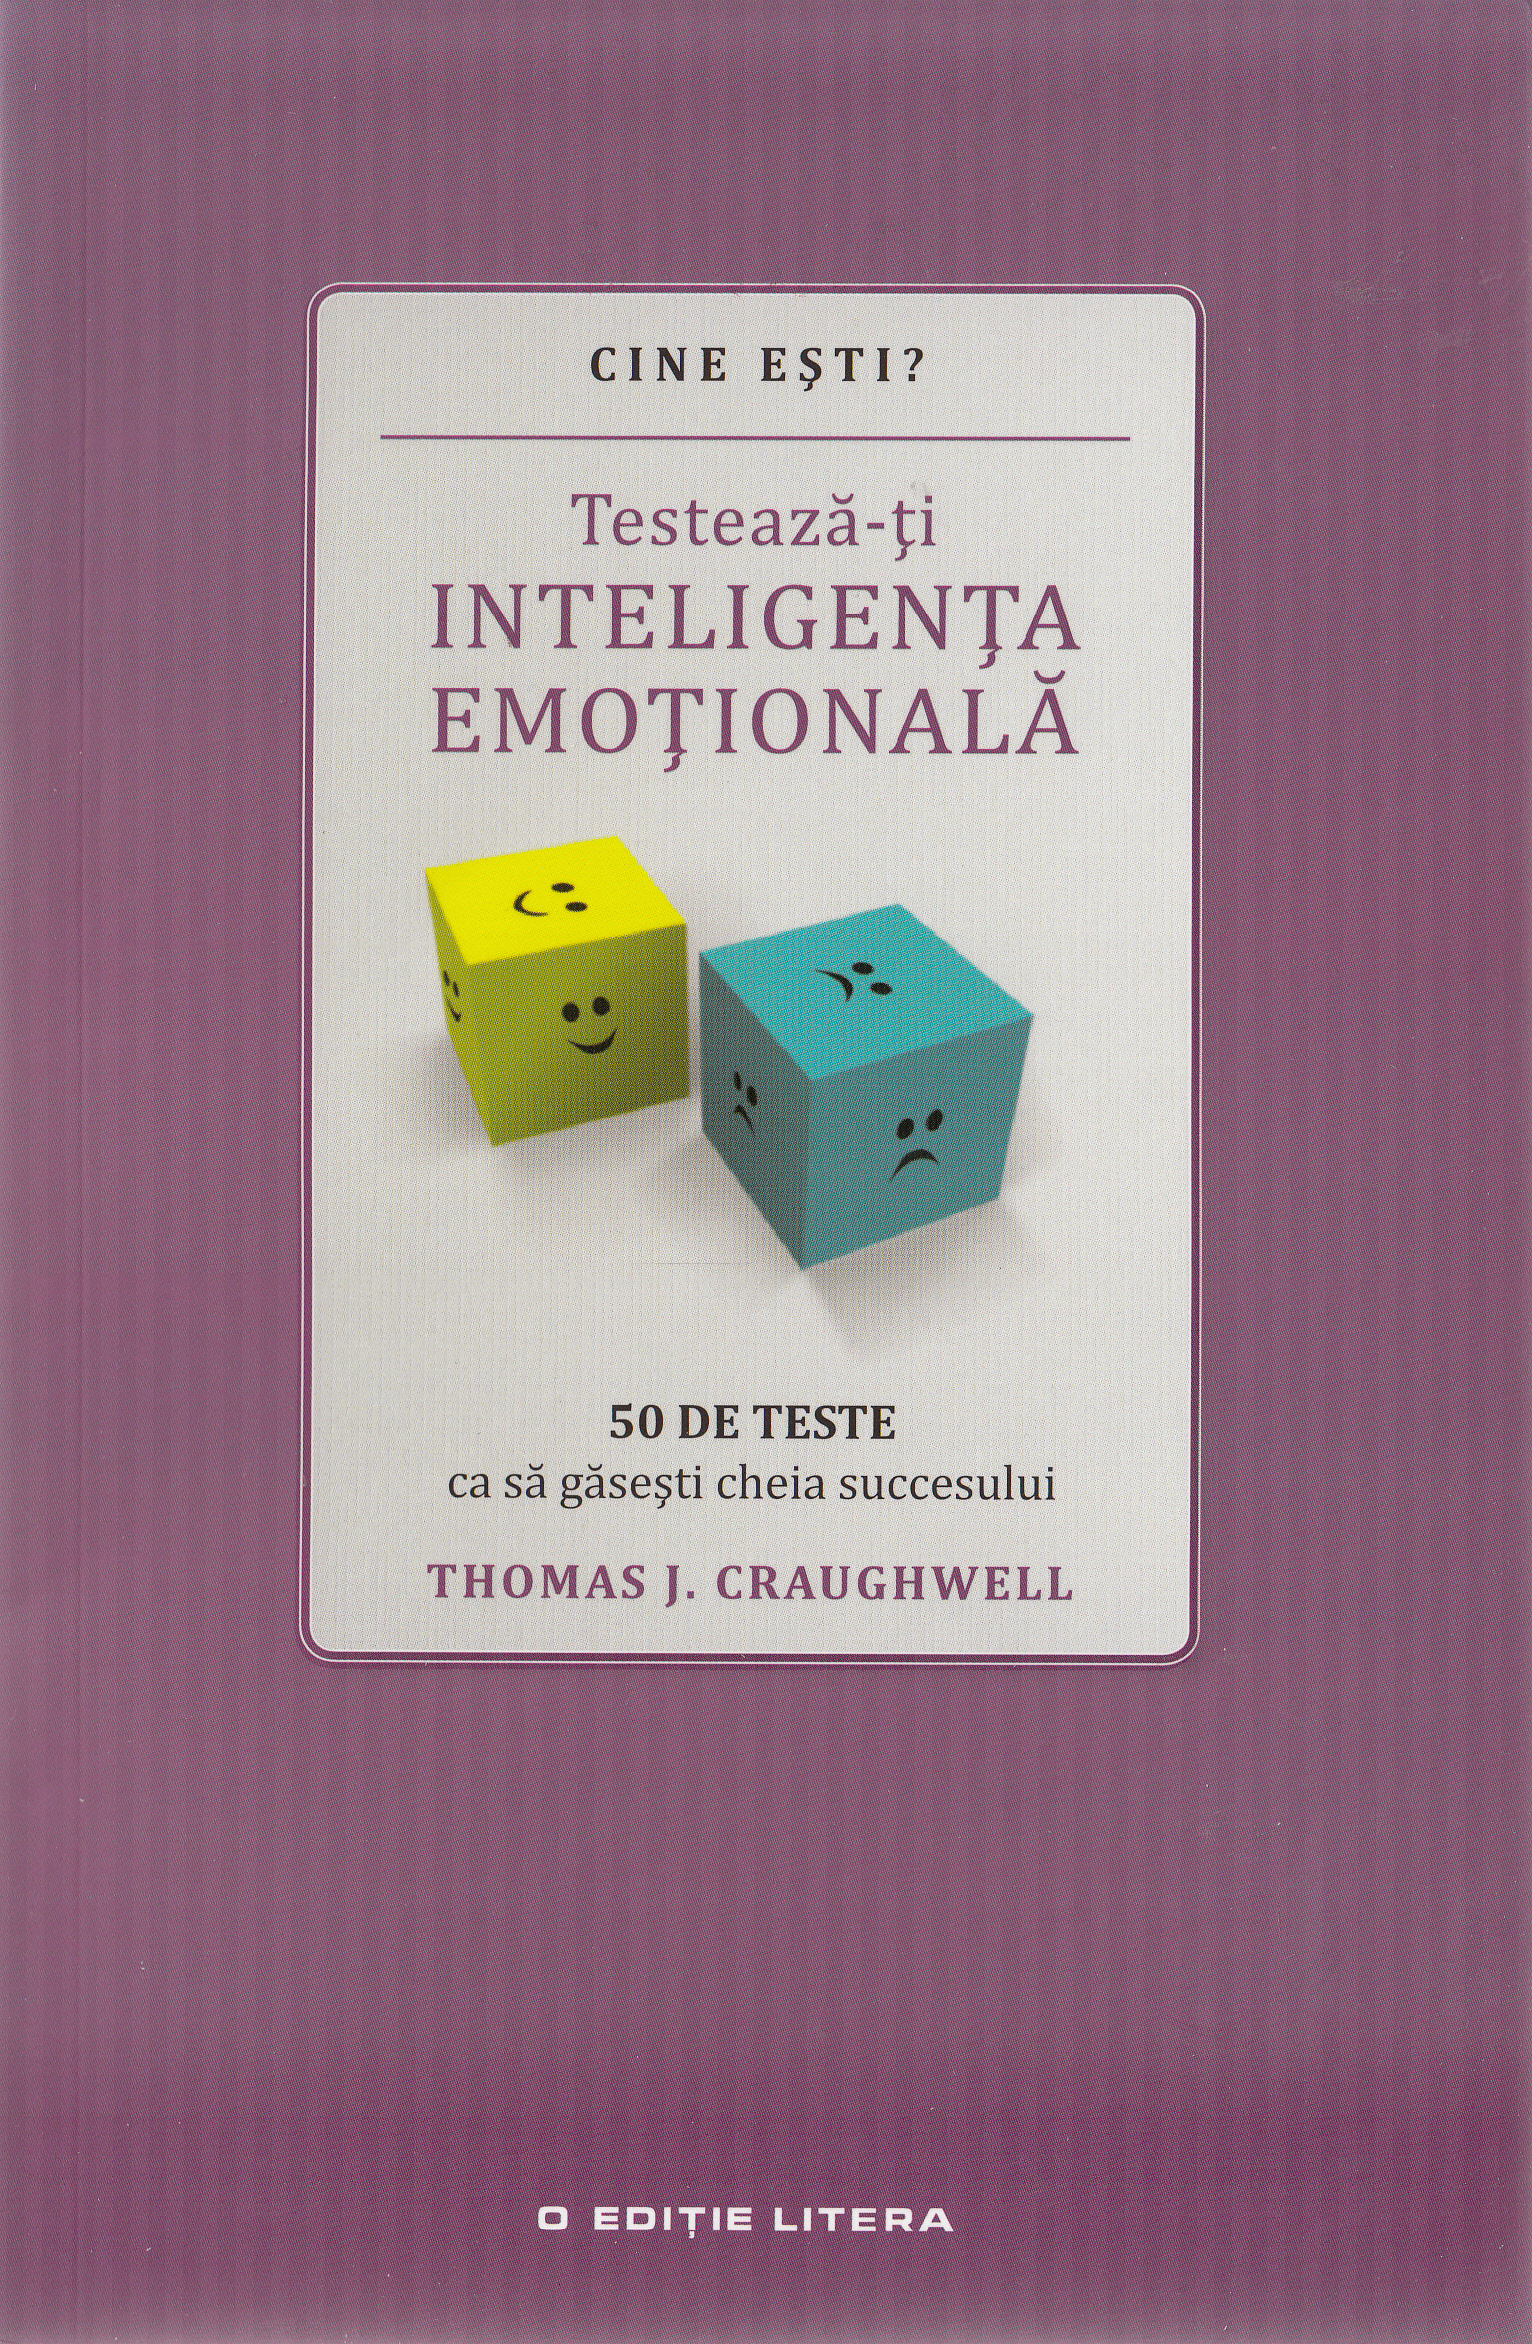 Cine esti? Testeaza-ti inteligenta emotionala - Thomas J. Craughwell